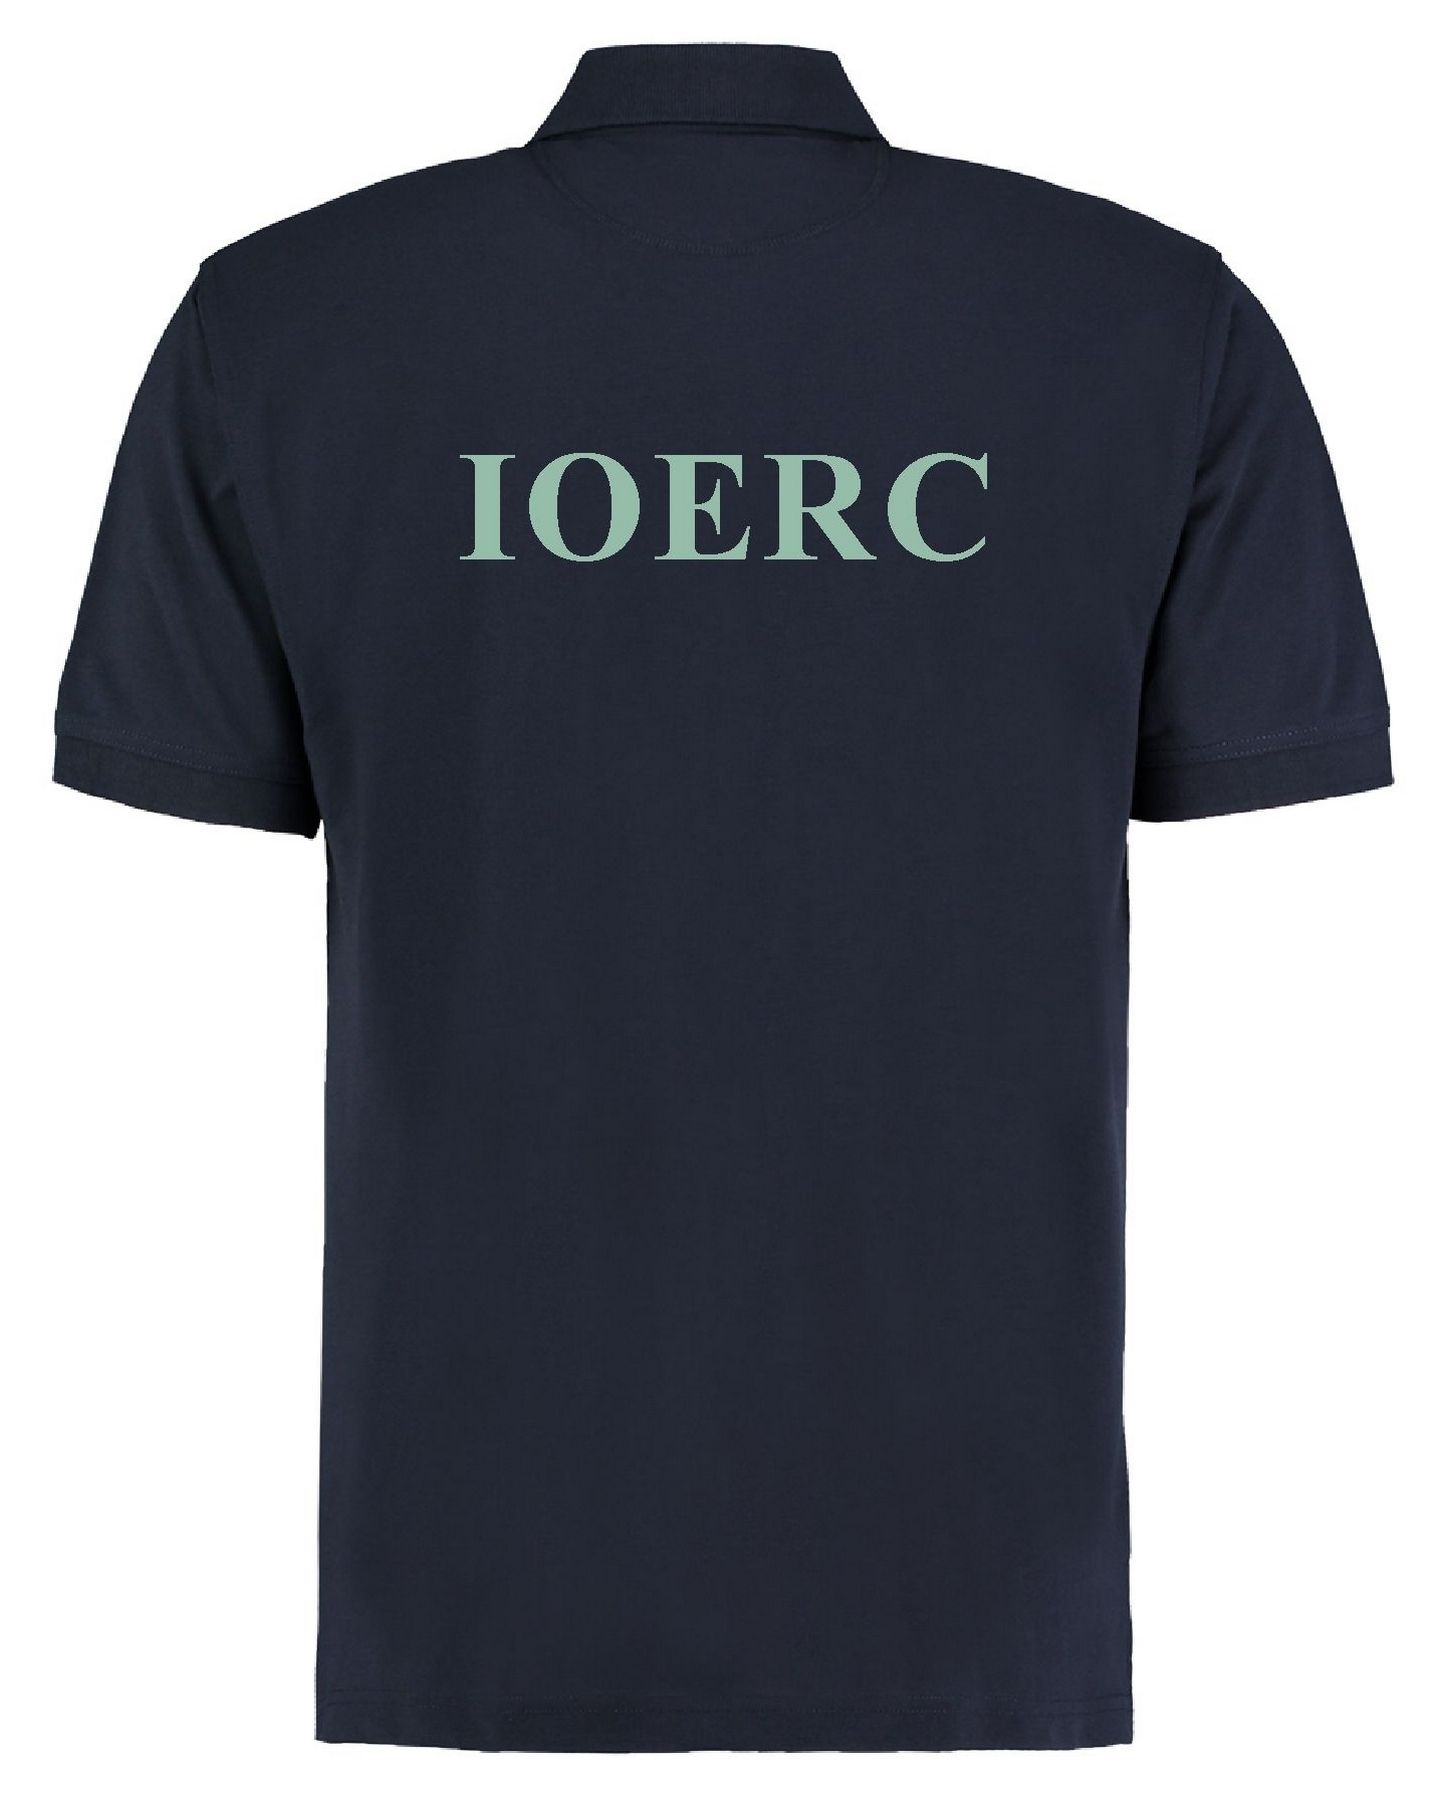 IOERC – Polo Shirt (Unisex)